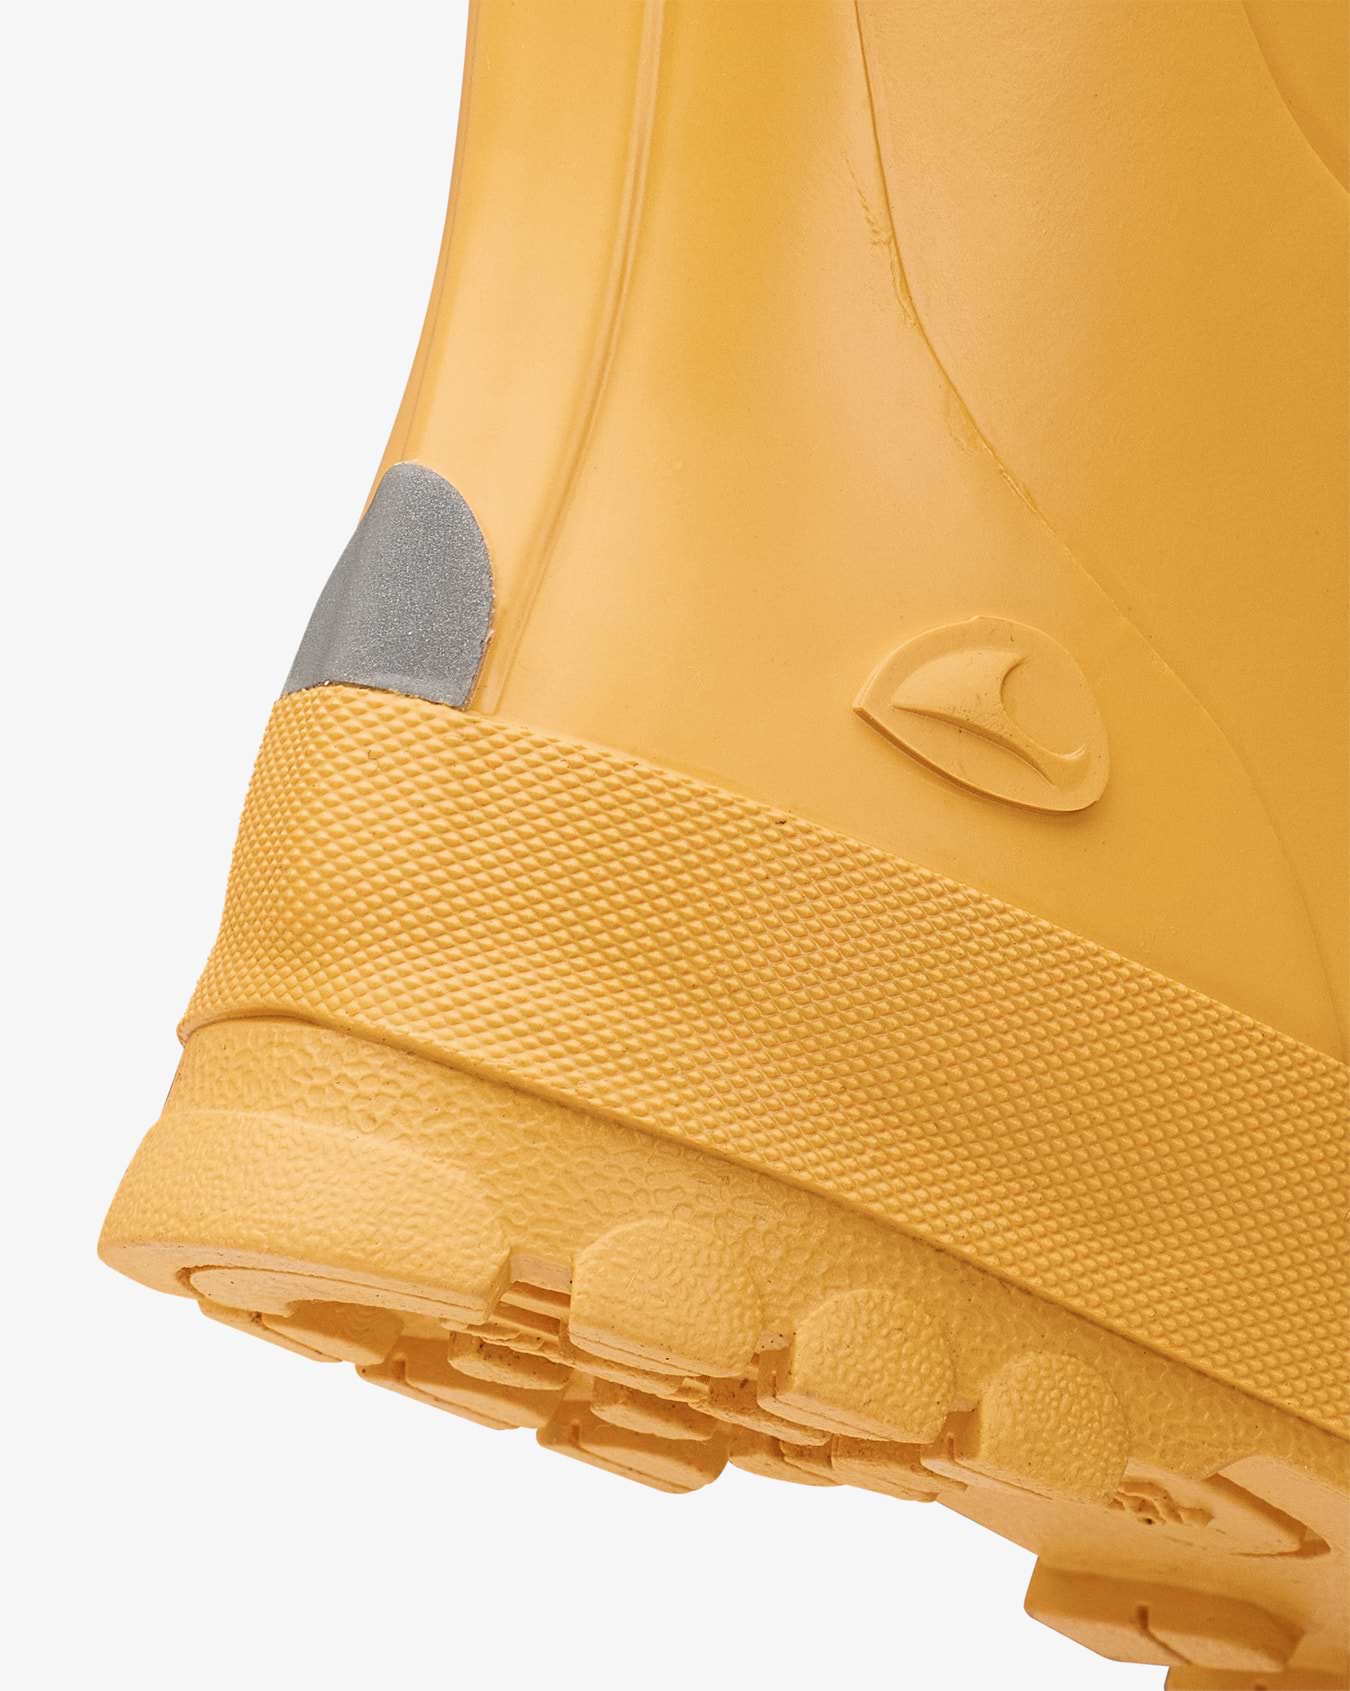 Jolly Sun/Yellow Rubber Boot